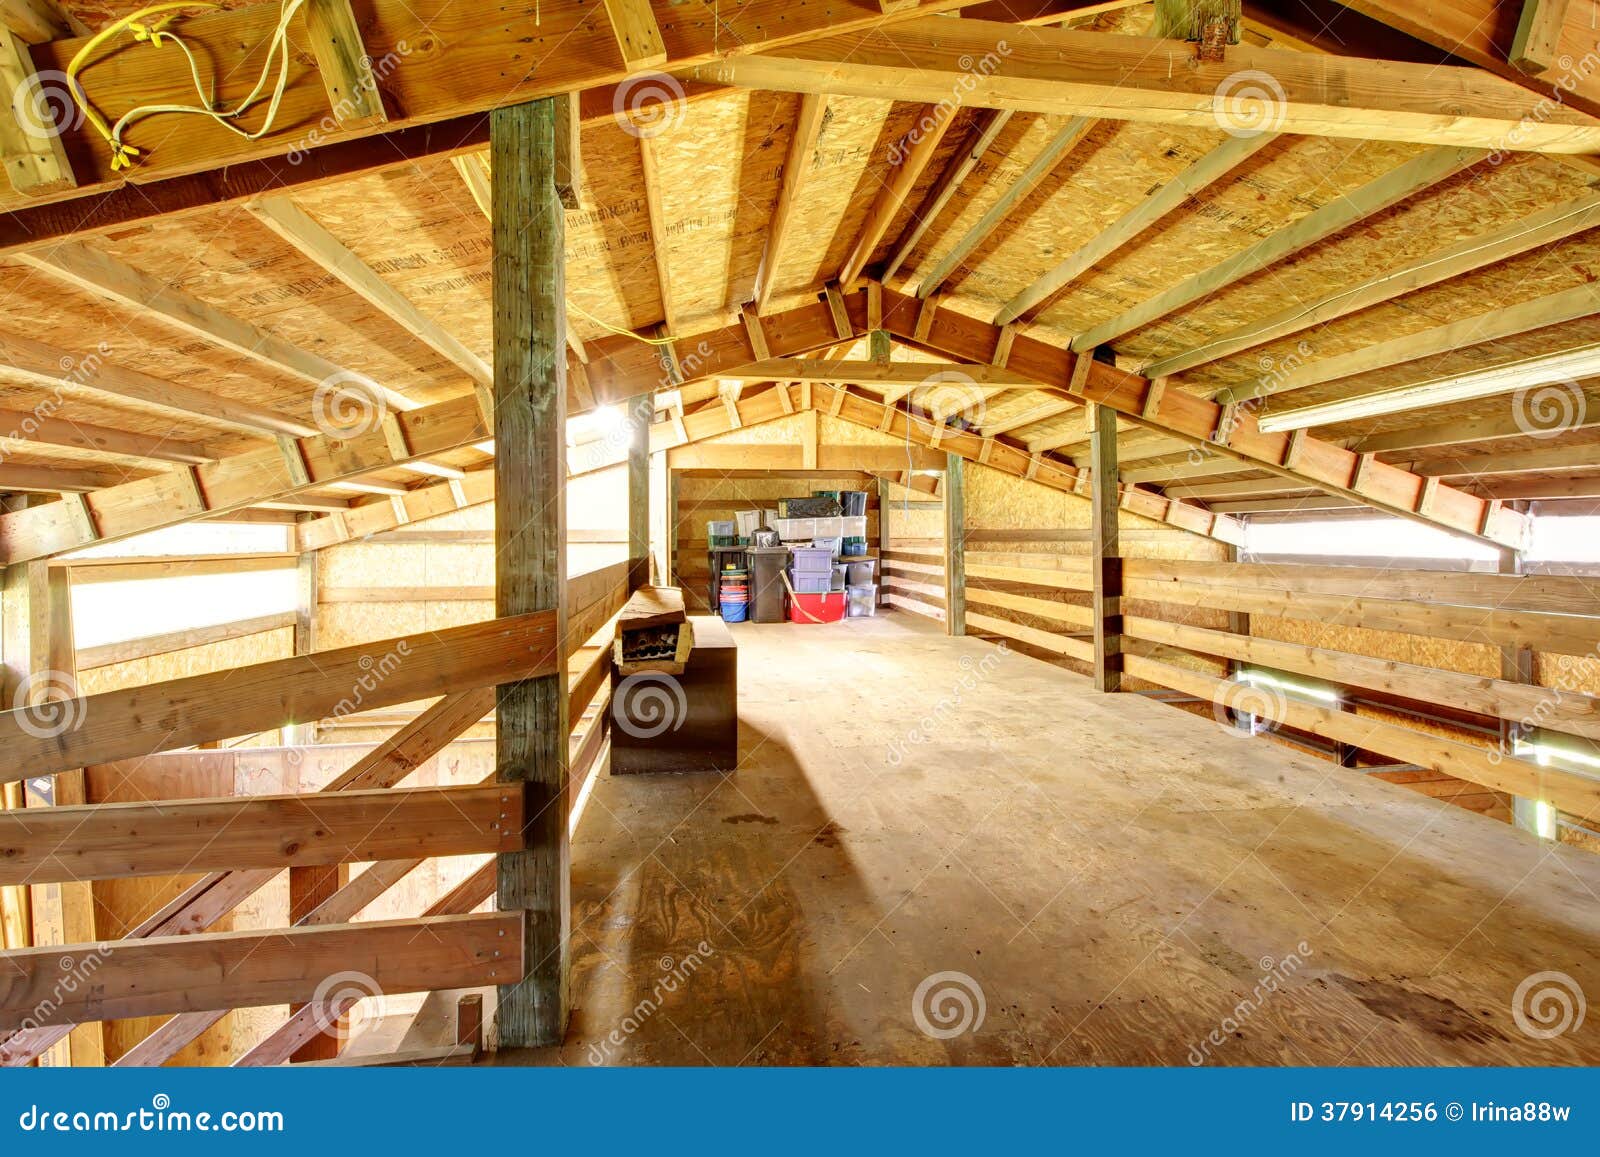 Large Farm Horse Stable Barn. Stock Photo - Image: 37914256